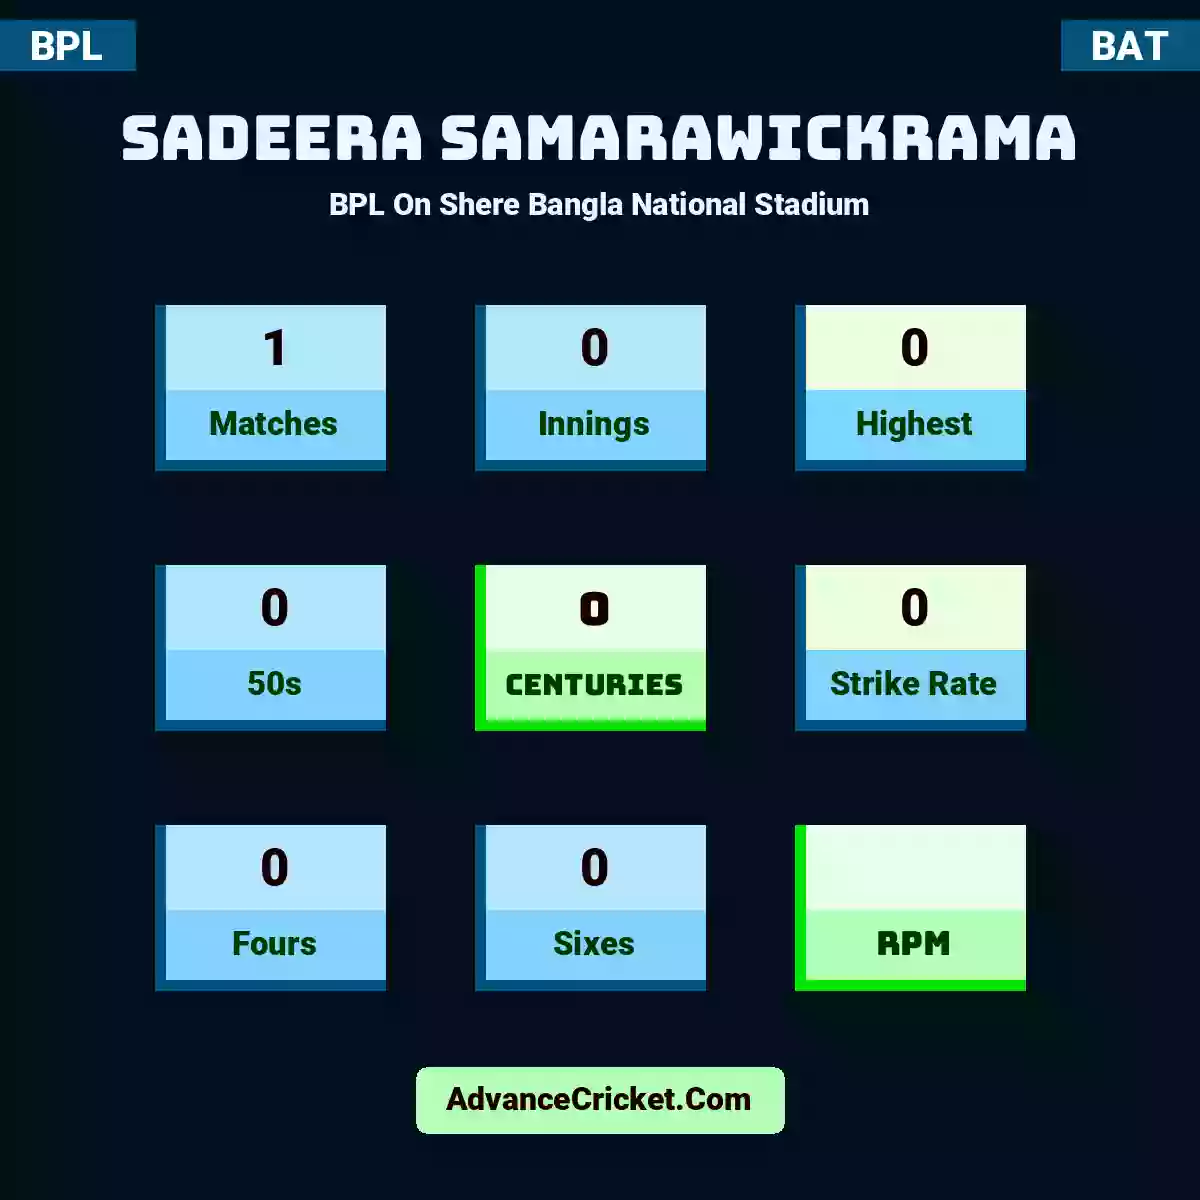 Sadeera Samarawickrama BPL  On Shere Bangla National Stadium, Sadeera Samarawickrama played 1 matches, scored 0 runs as highest, 0 half-centuries, and 0 centuries, with a strike rate of 0. S.Samarawickrama hit 0 fours and 0 sixes.